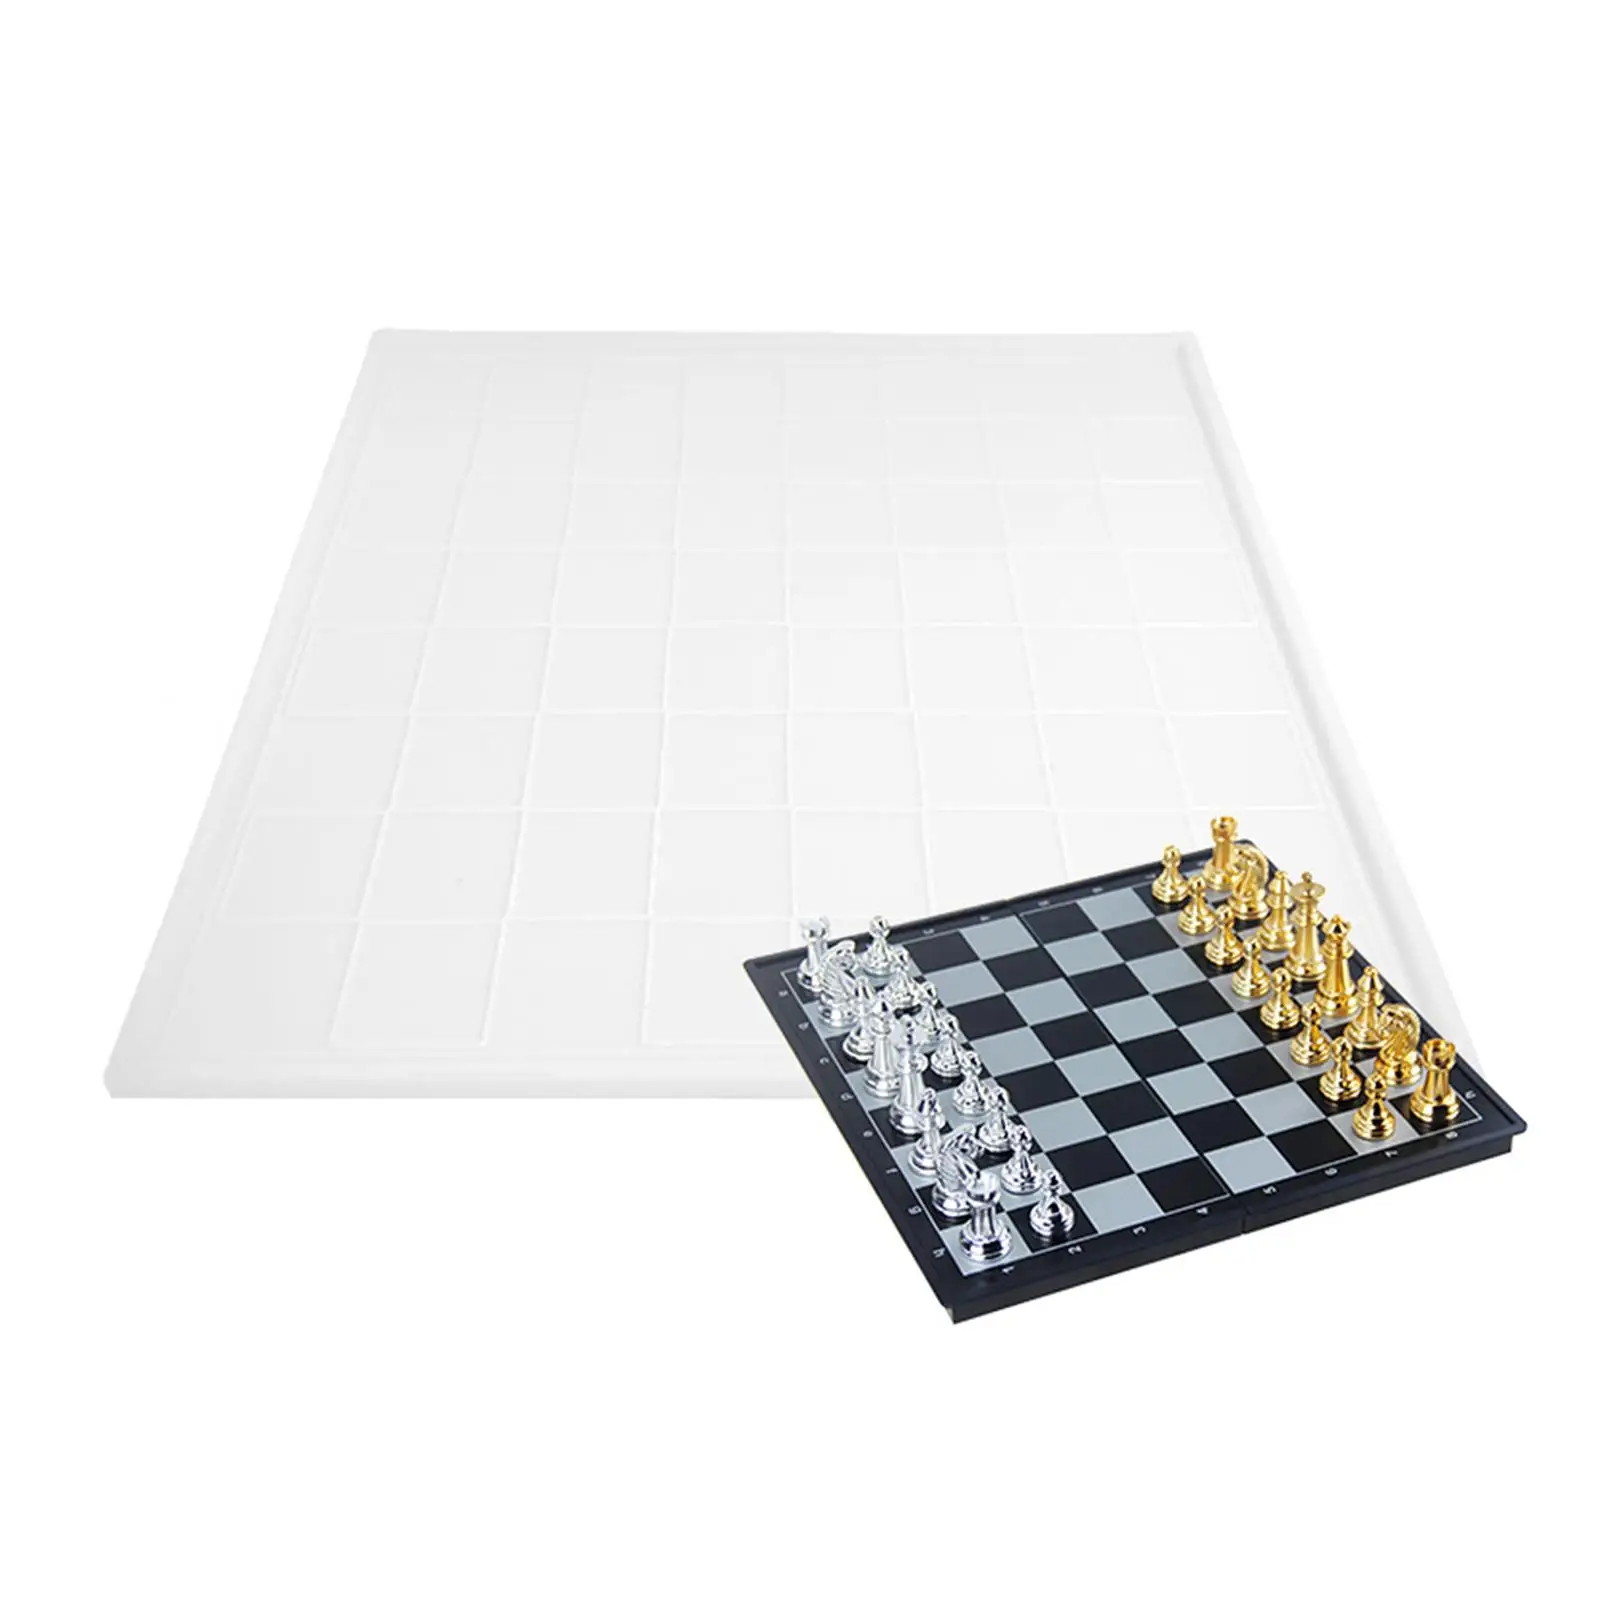 Epoxy Resin Coaster Silicone Trays International Chess Board Checkerboard Casting for